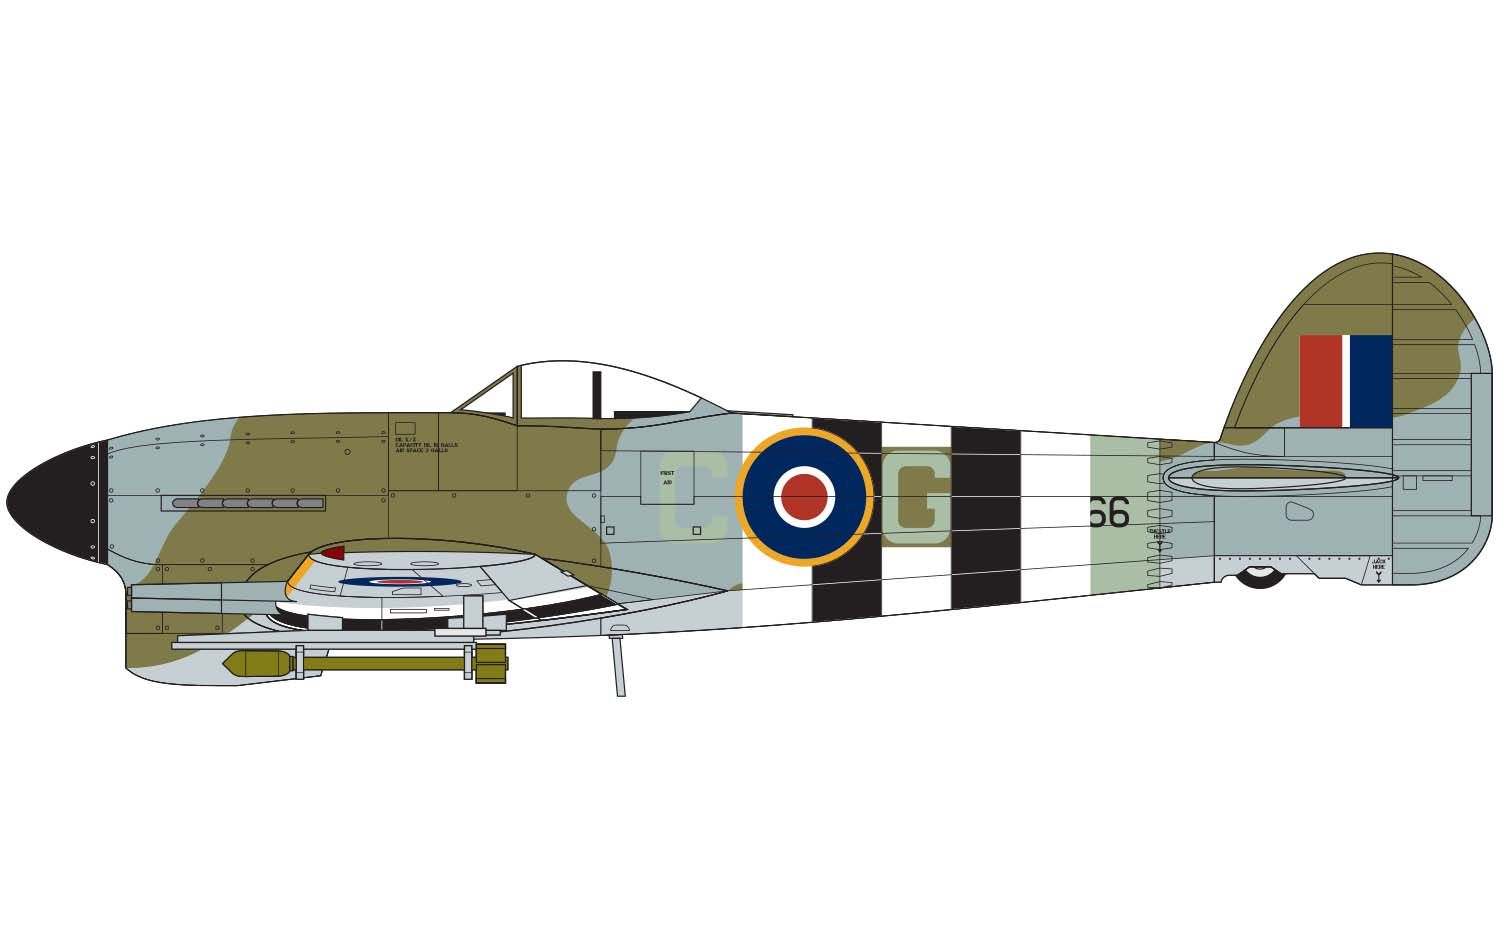 Hawker Typhoon Mk IB (1:72) - Loaded Dice